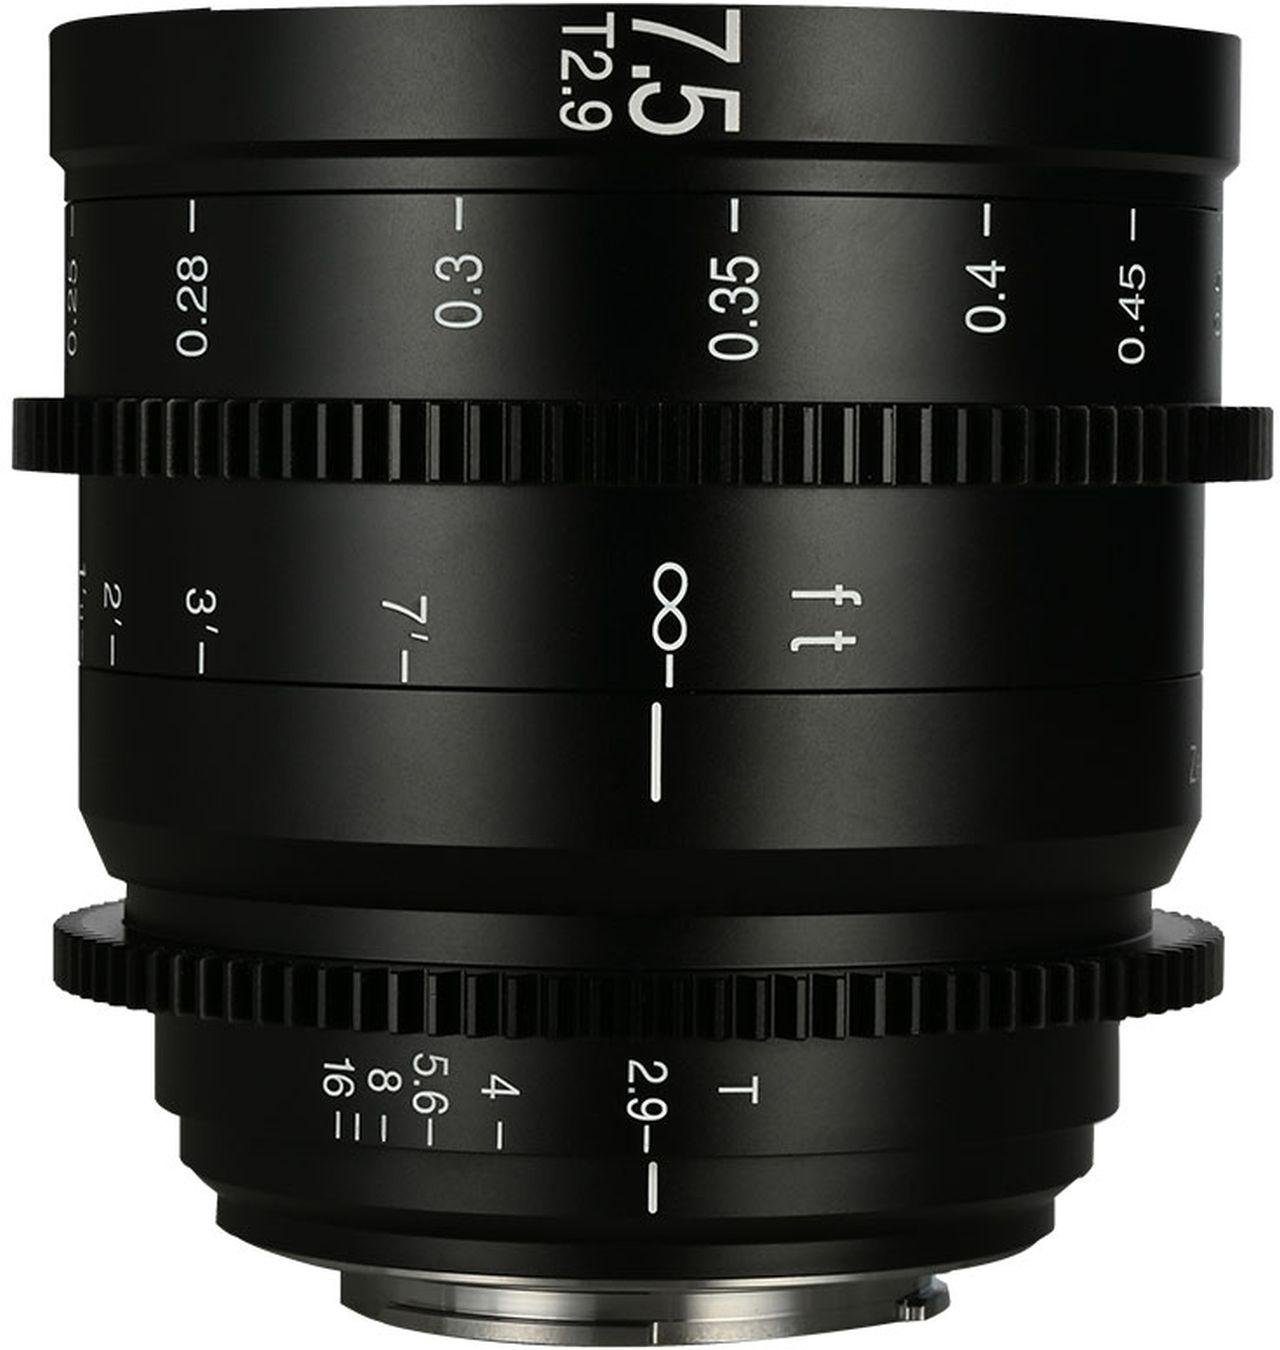 LAOWA 7,5mm f2,9 Zero-D S35 Cine für Fuji X Objektiv